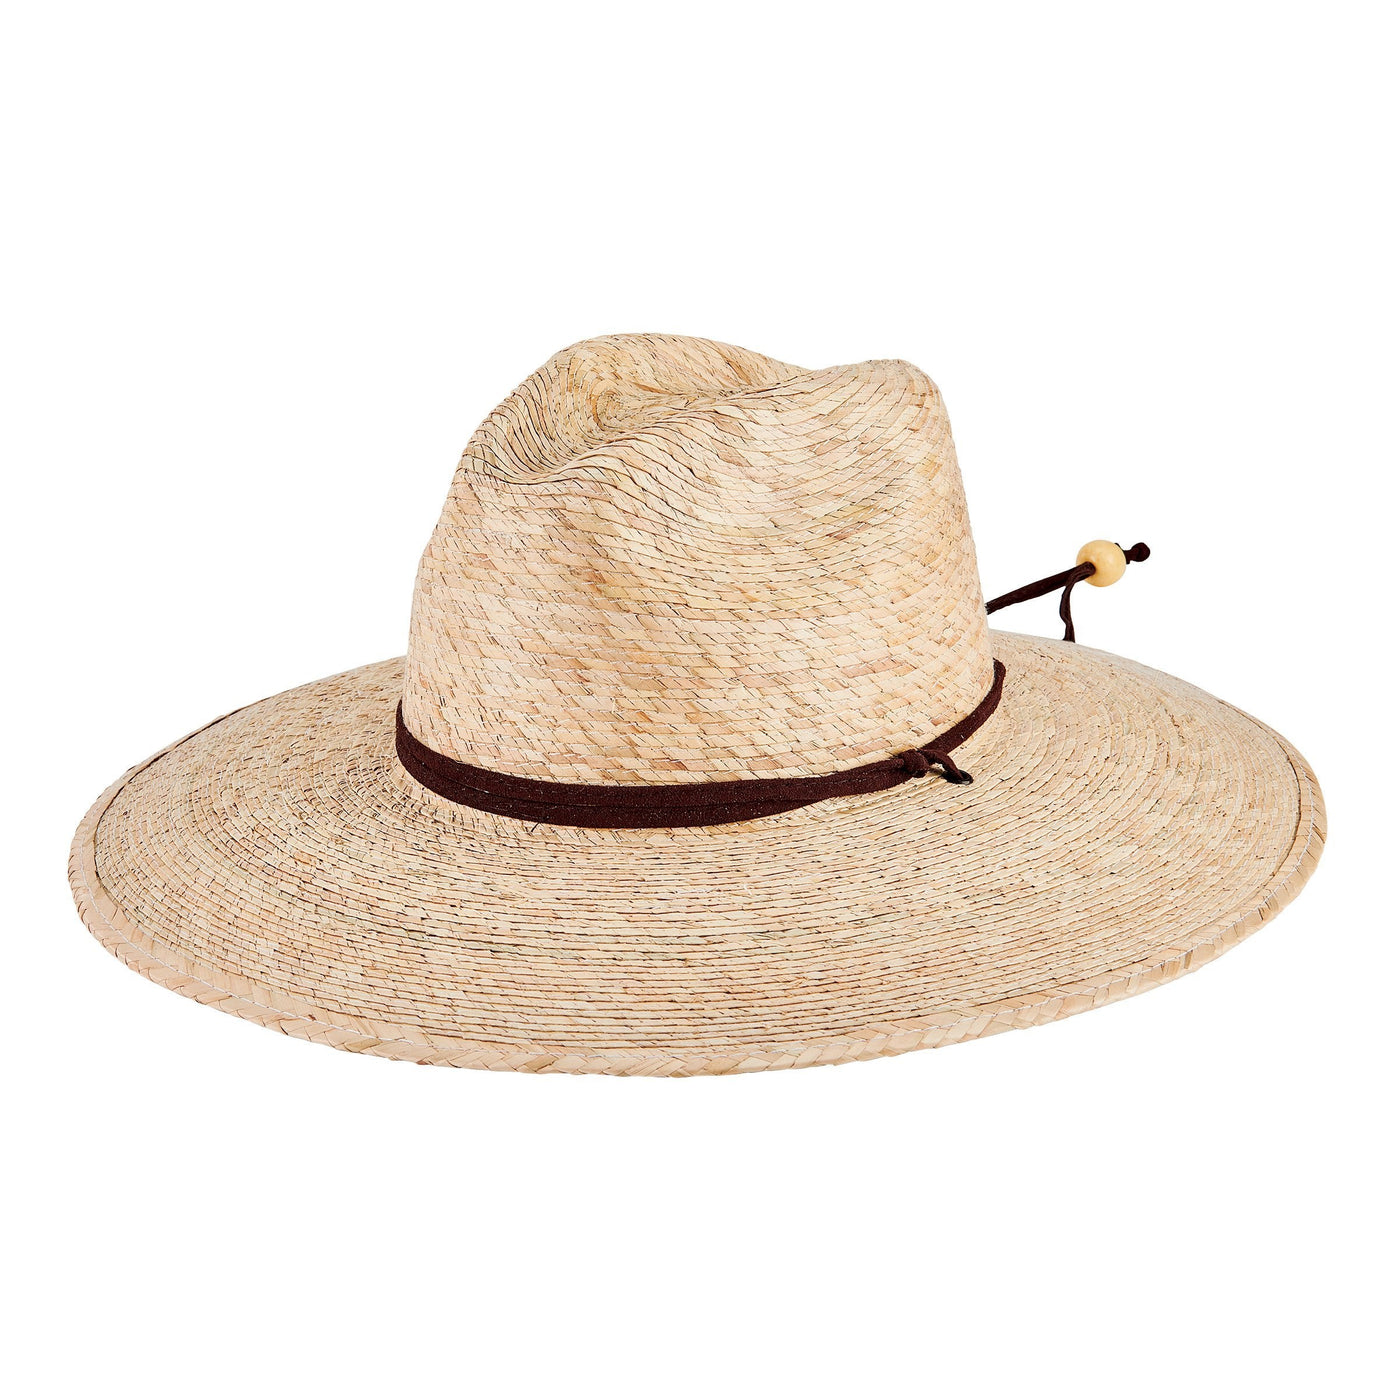 SUN BRIM - Women's Palm El Campo Sun Hat